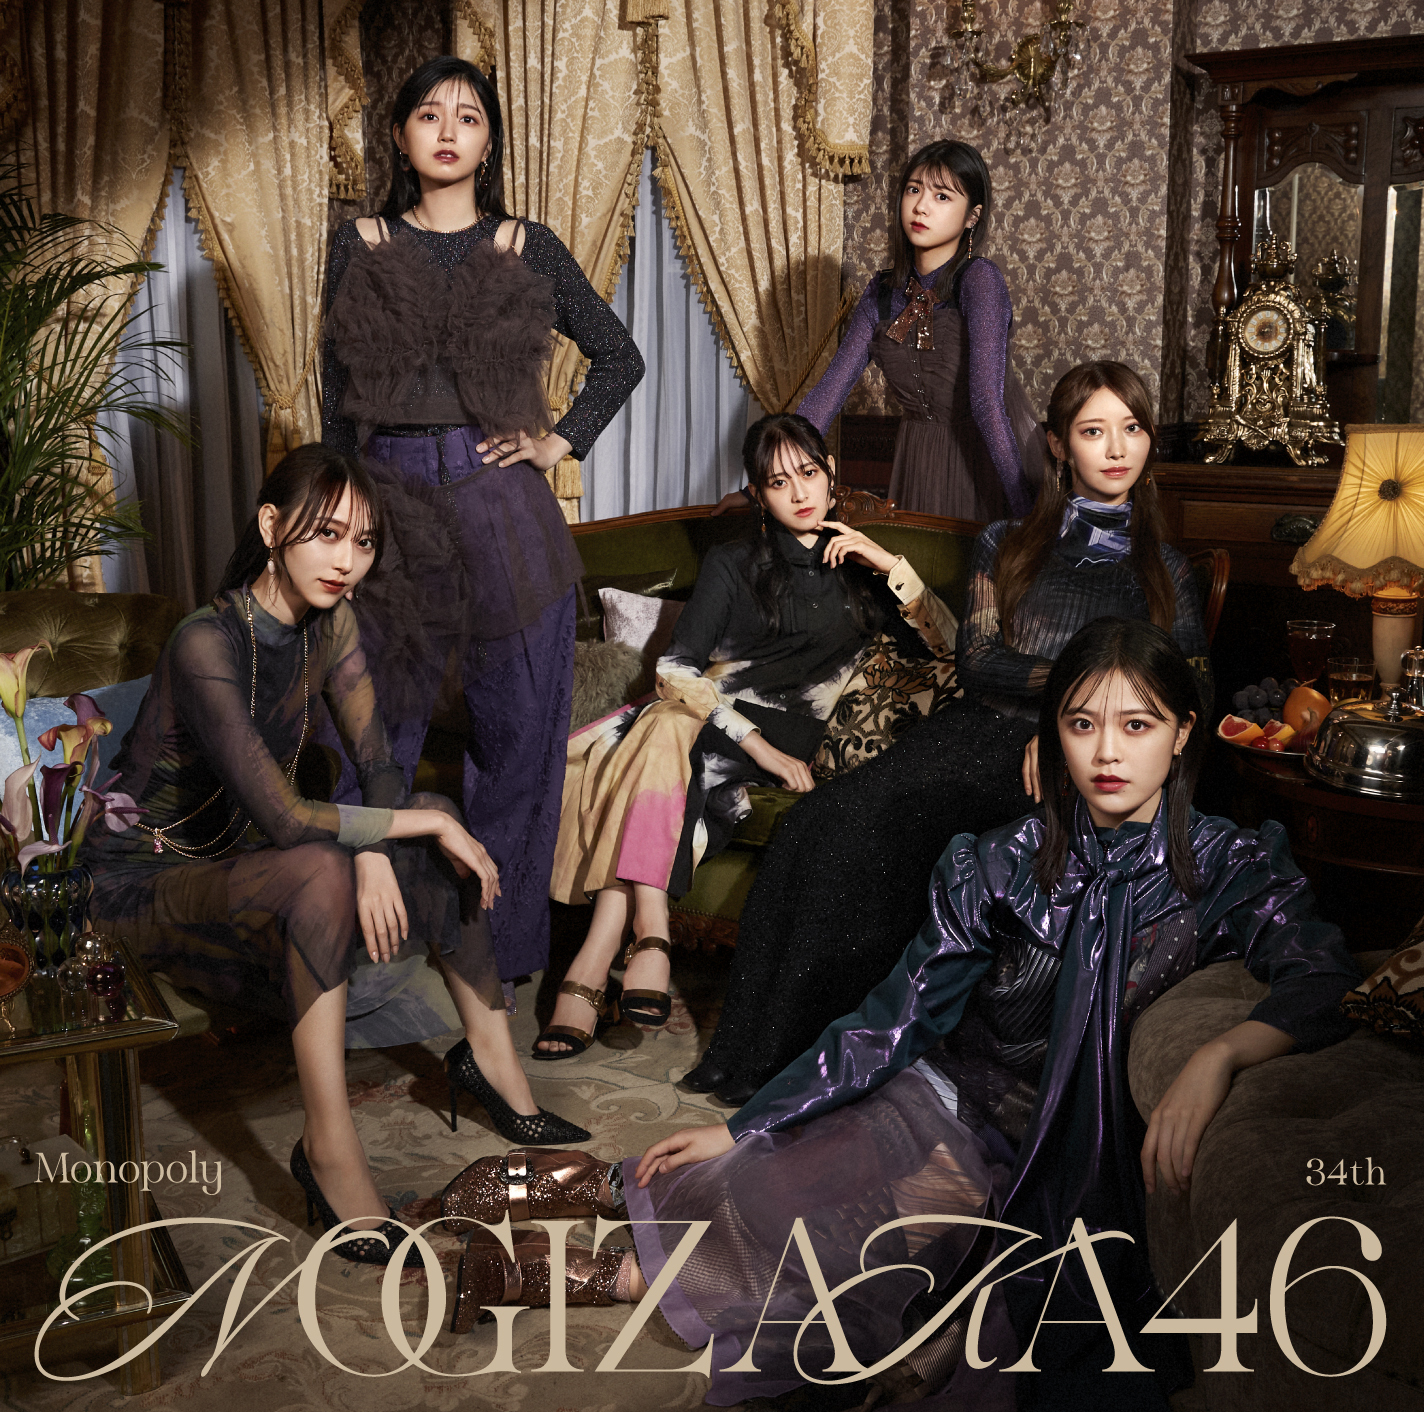 Nogizaka46 — Omoide ga Tomaranaku Naru cover artwork